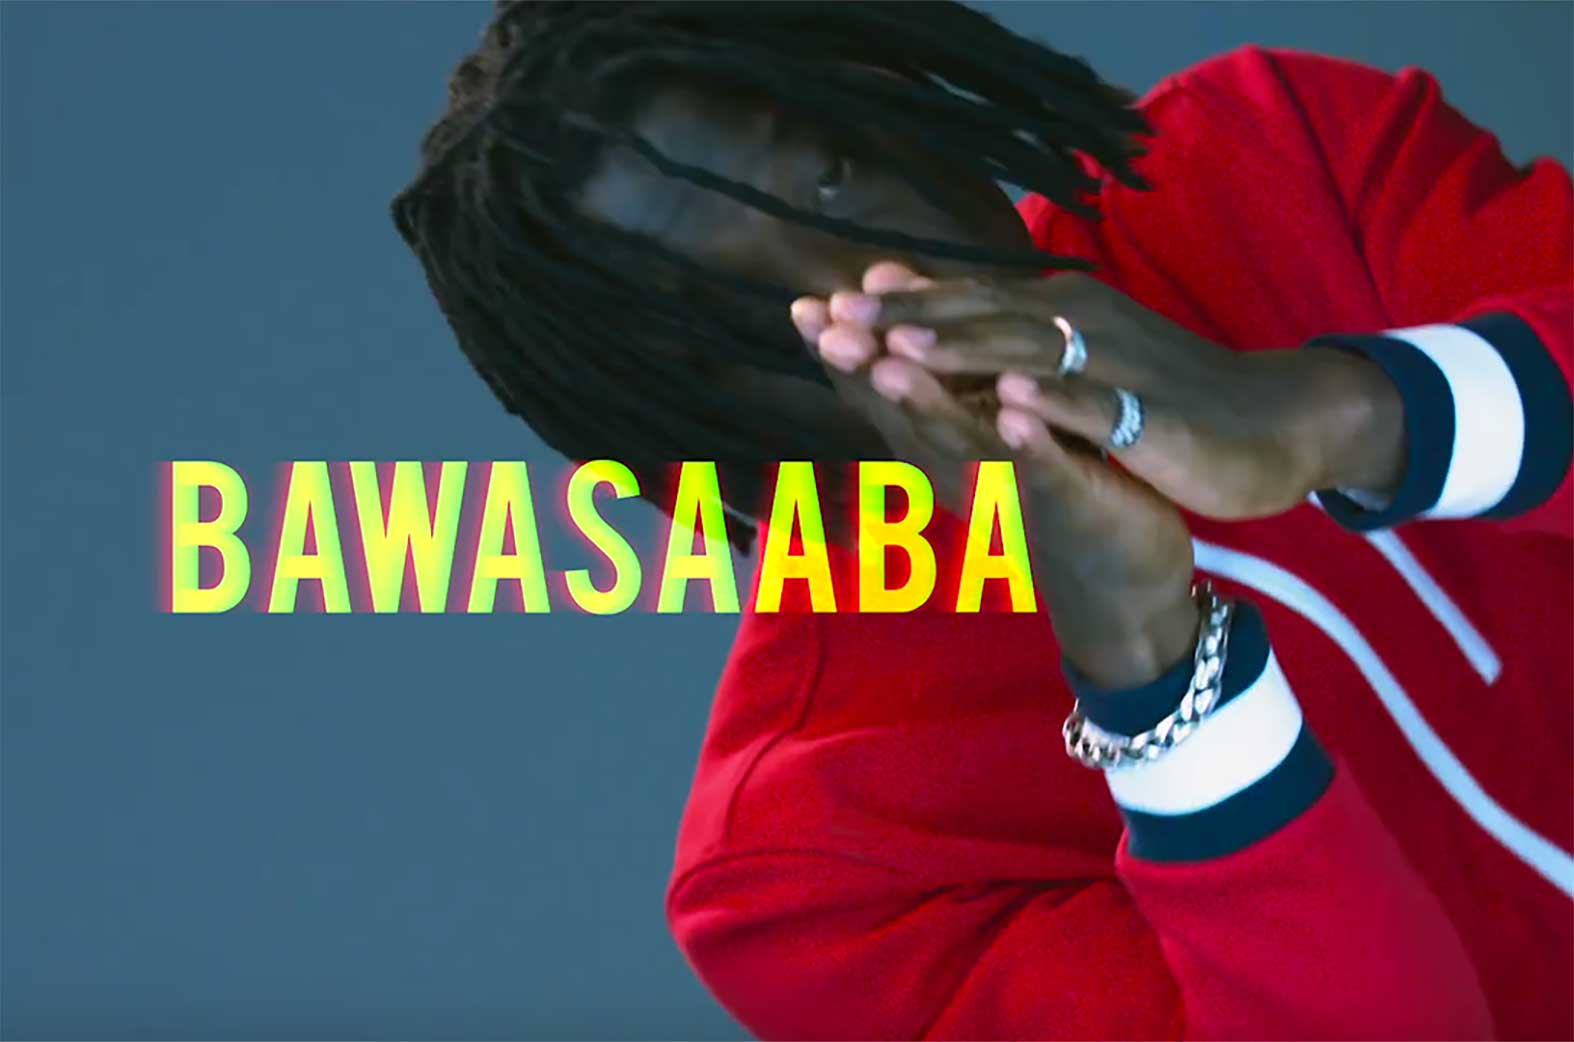 Bawasaaba by Stonebwoy